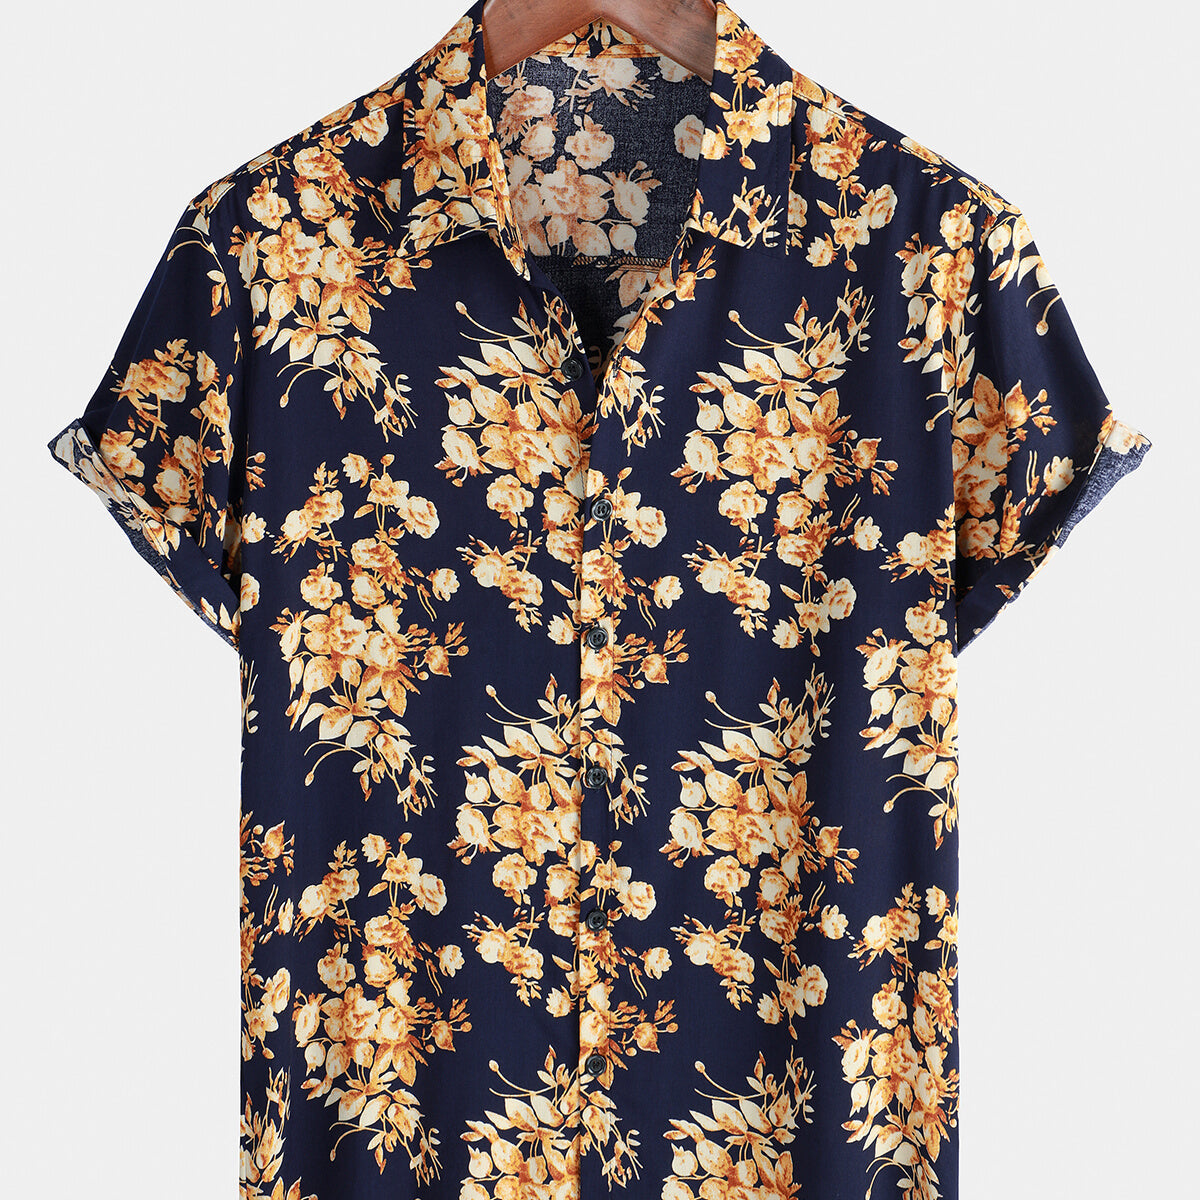 Men's Vintage Holiday Cotton Green Hawaiian Floral Button Up Short Sleeve Shirt